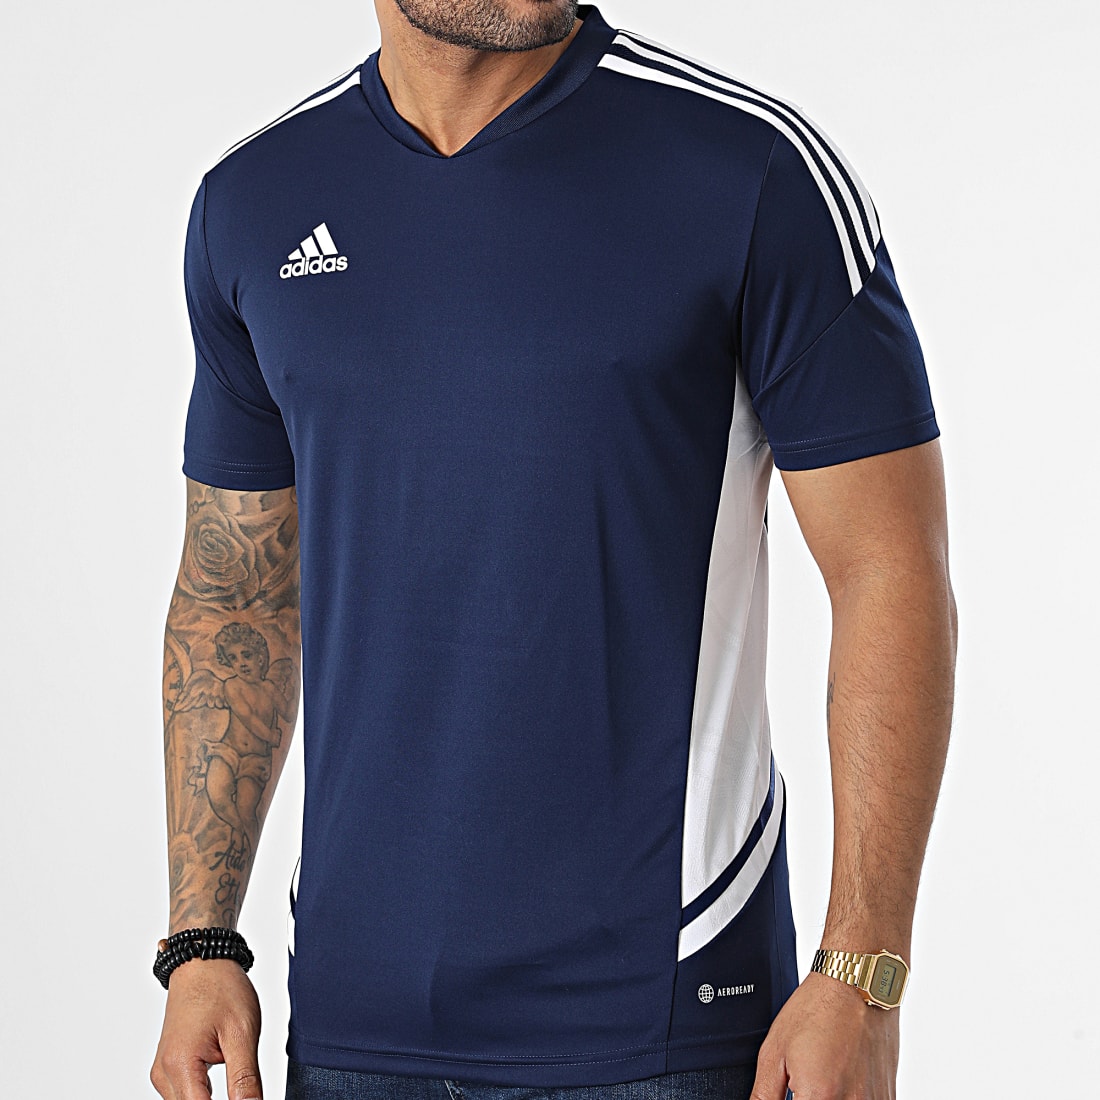 T-shirt 'adidas' - bleu marine - Kiabi - 20.00€